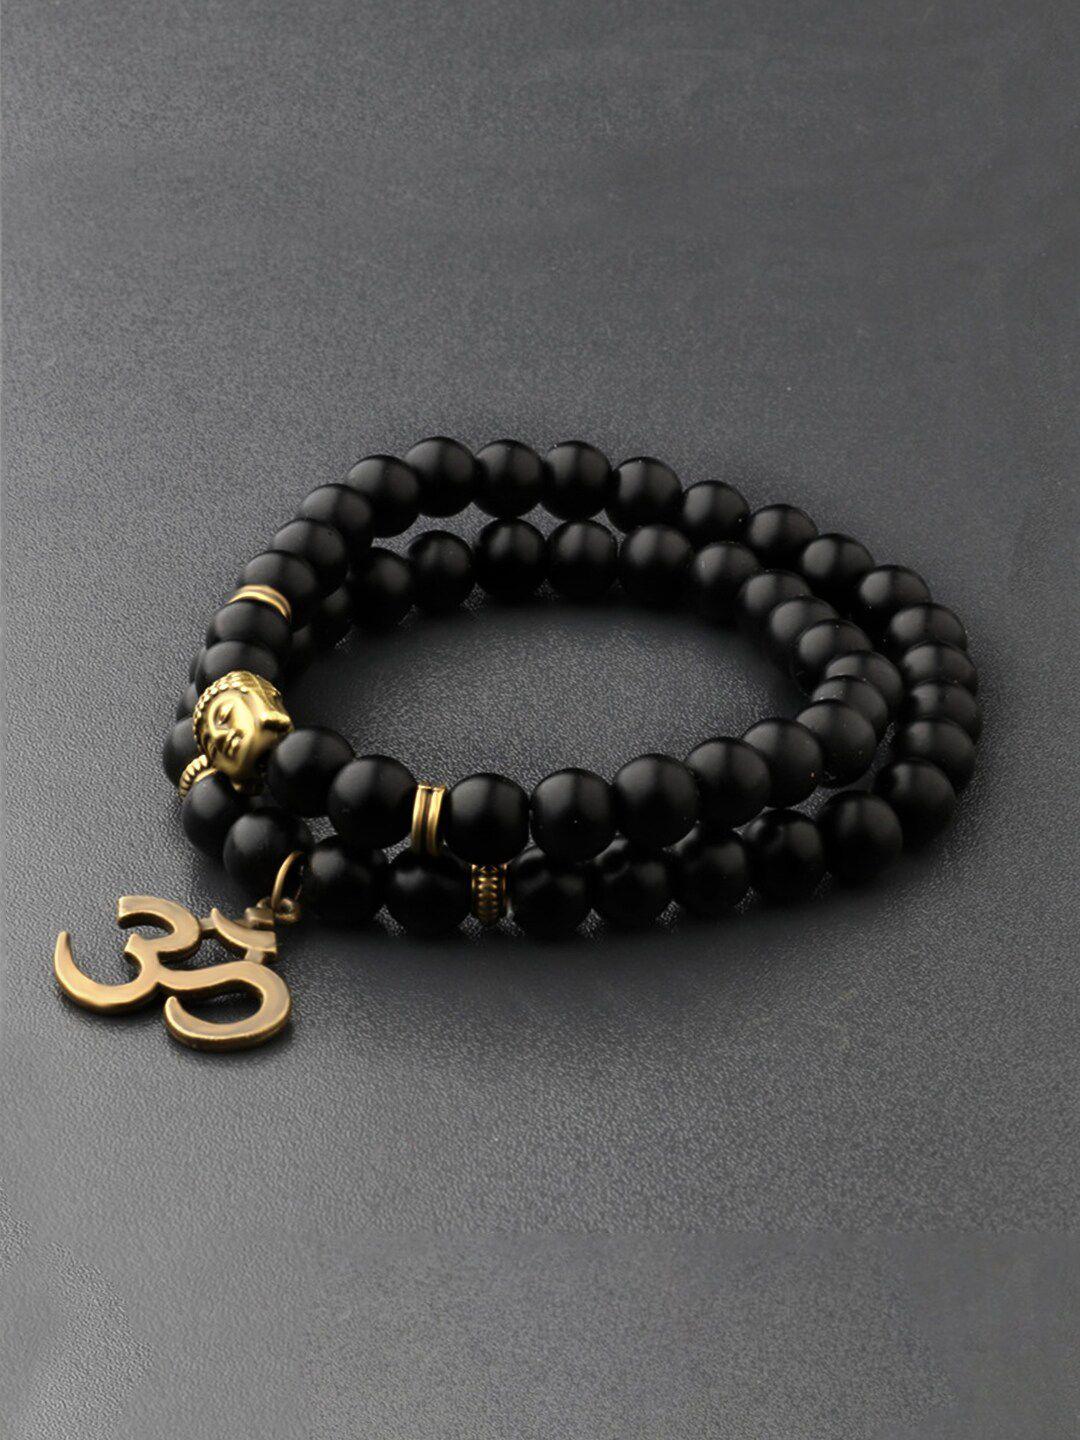 yellow chimes unisex black & gold-toned  devine buddha beads charm bracelet